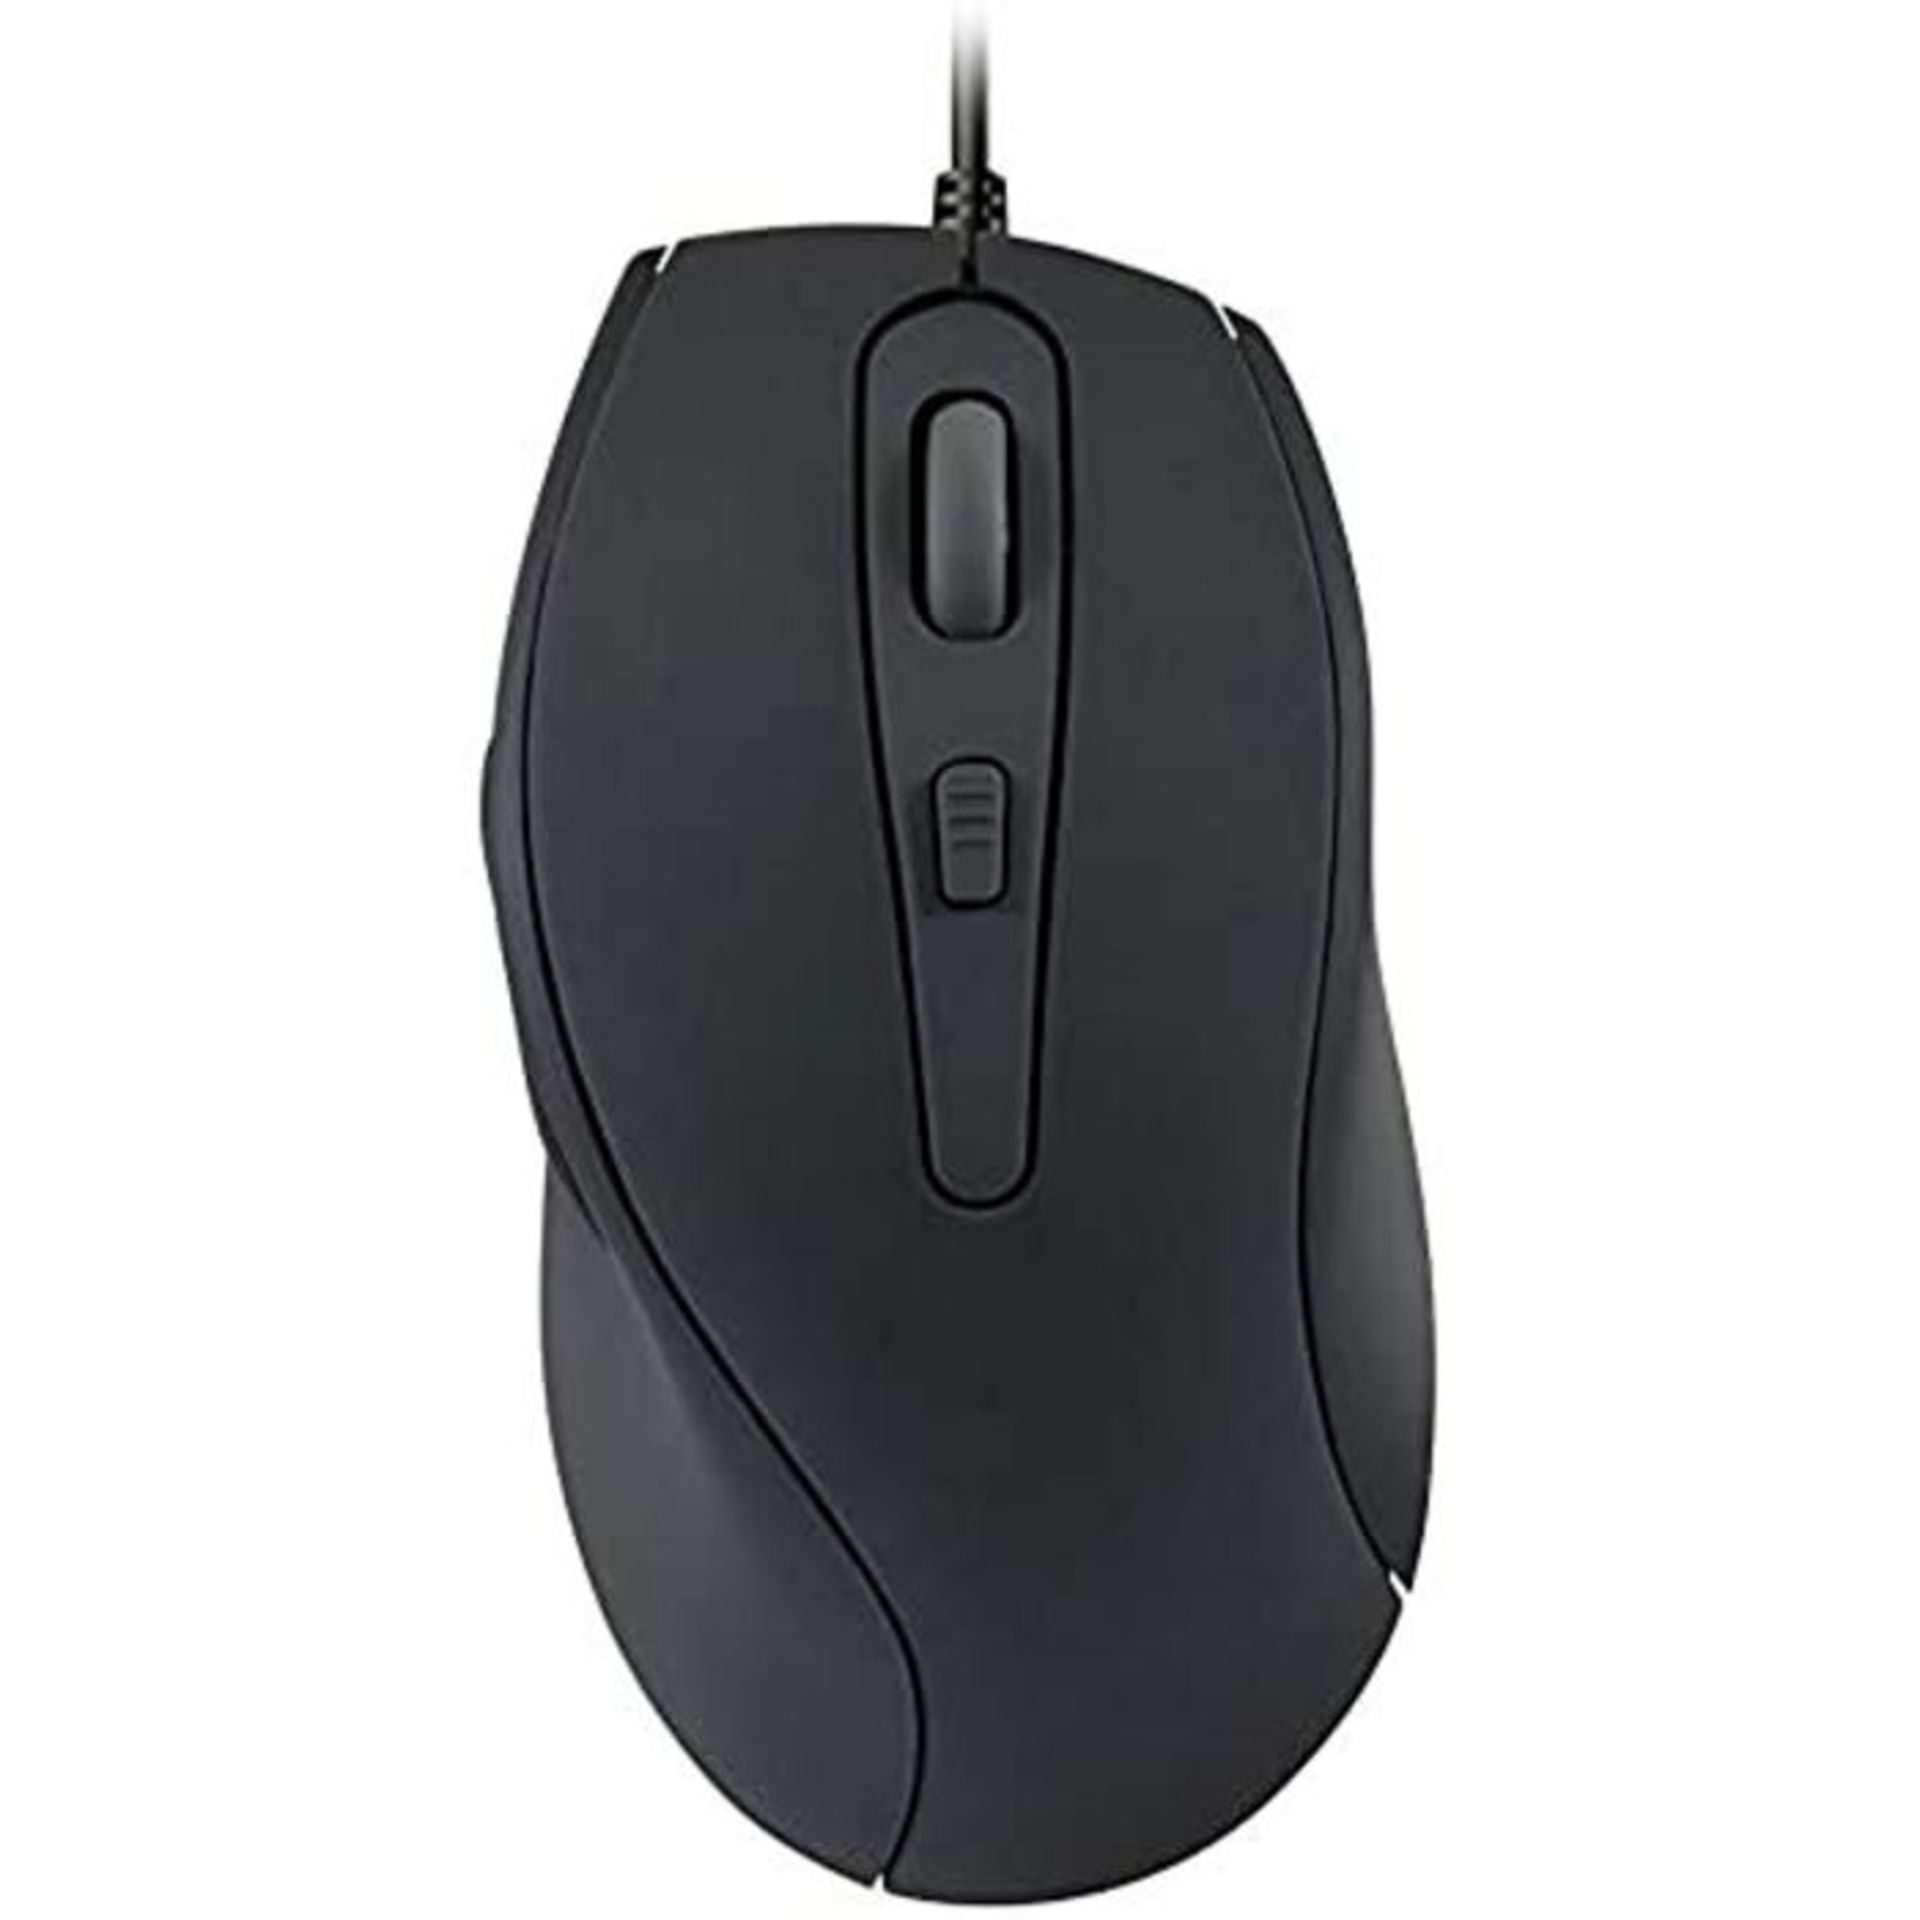 Speedlink AXON Silent Optical Mouse - USB Mouse- Ergonomic, Rubber/Black